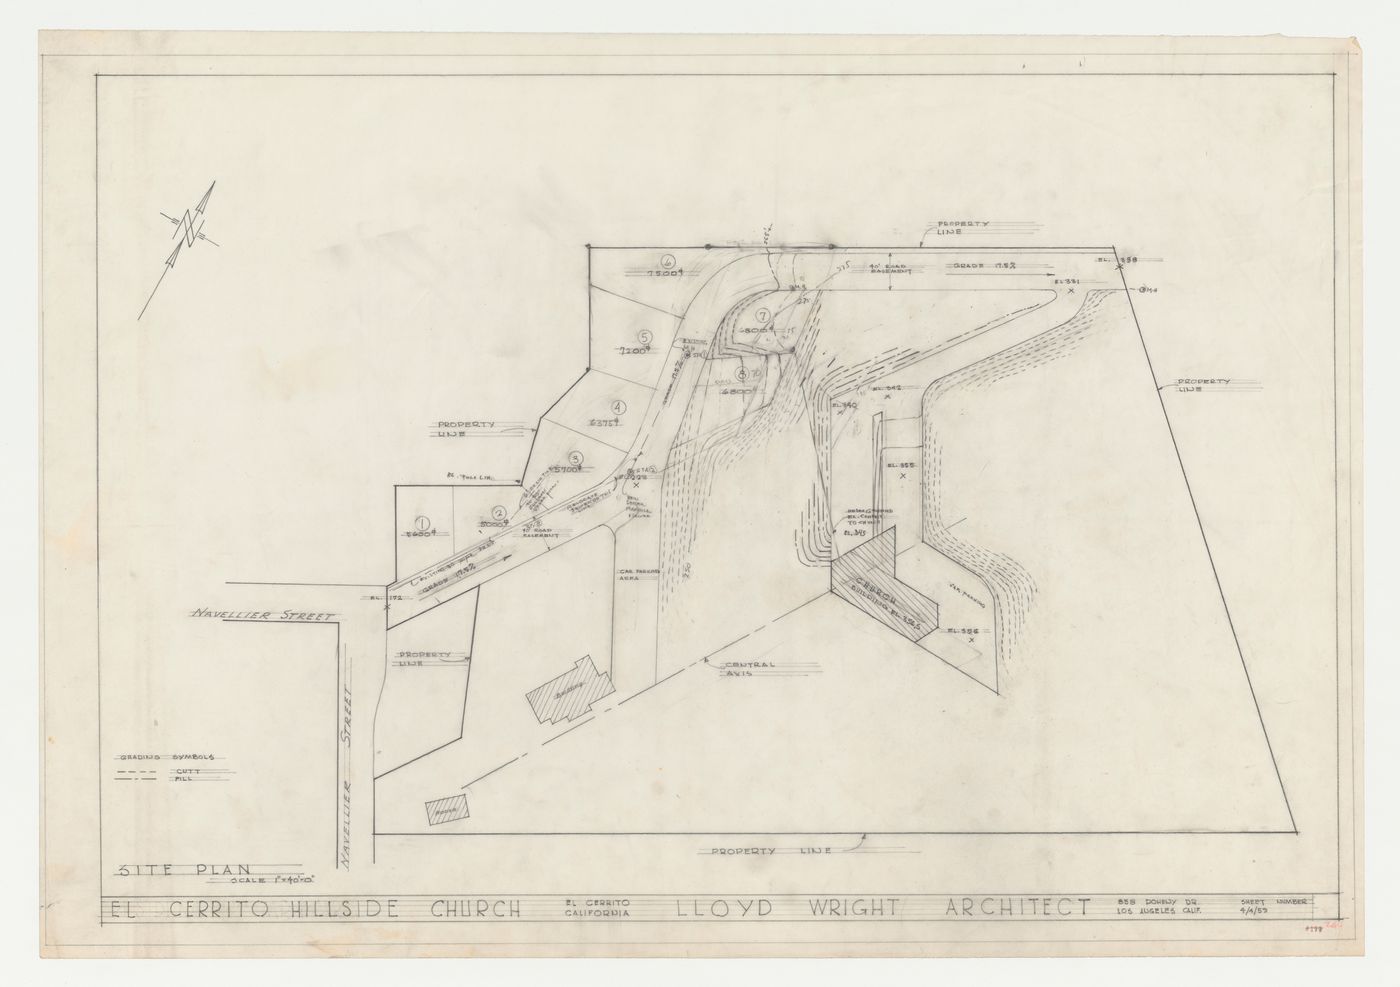 Swedenborg Memorial Chapel, El Cerrito, California: Block plan showing lot subdivision